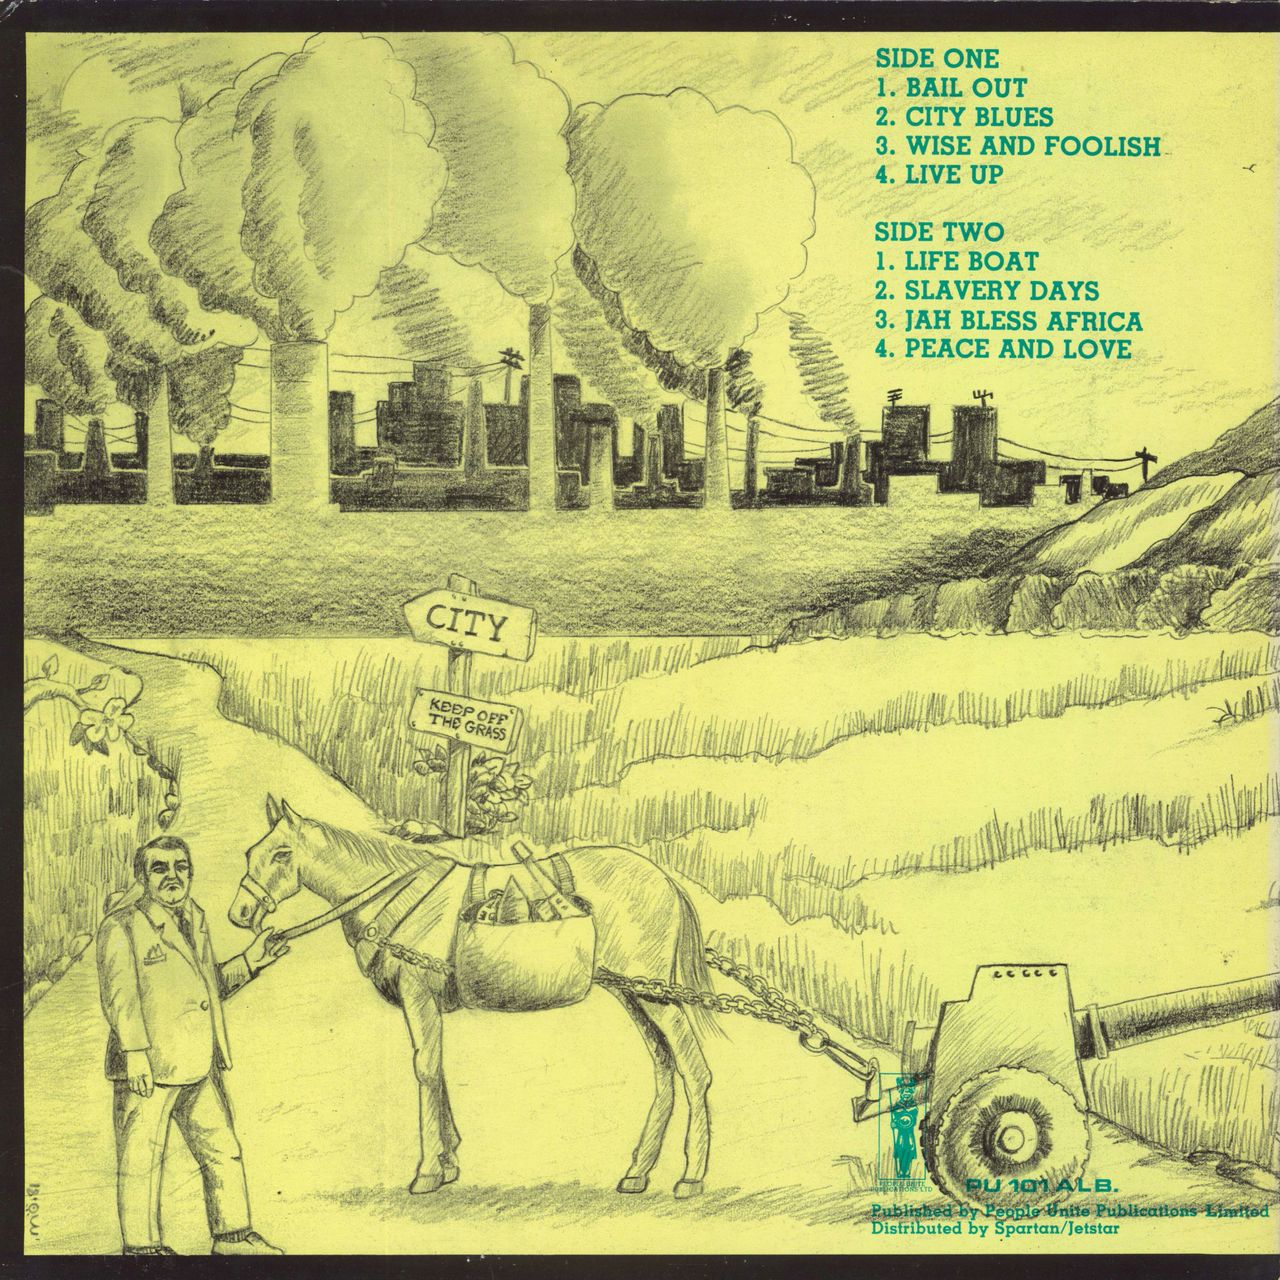 Misty In Roots Wise And Foolish UK Vinyl LP — RareVinyl.com